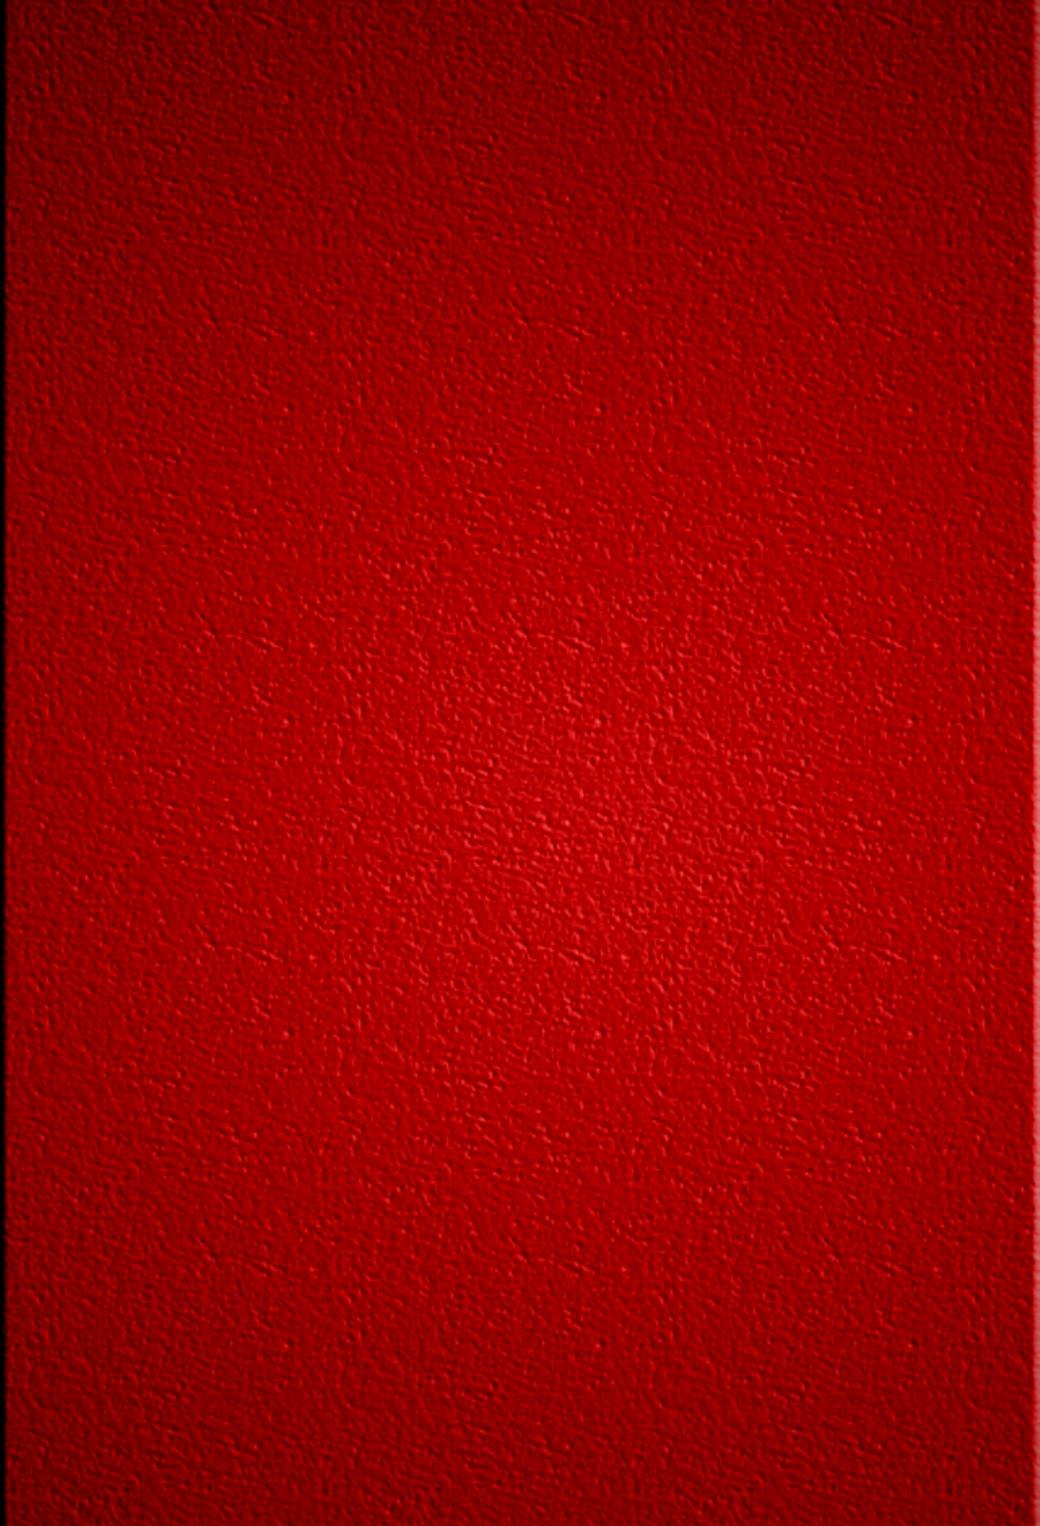 Iphone 壁紙 シンプル 赤 Iphone 壁紙 シンプル 赤 ちょうど最高のディズニーの画像